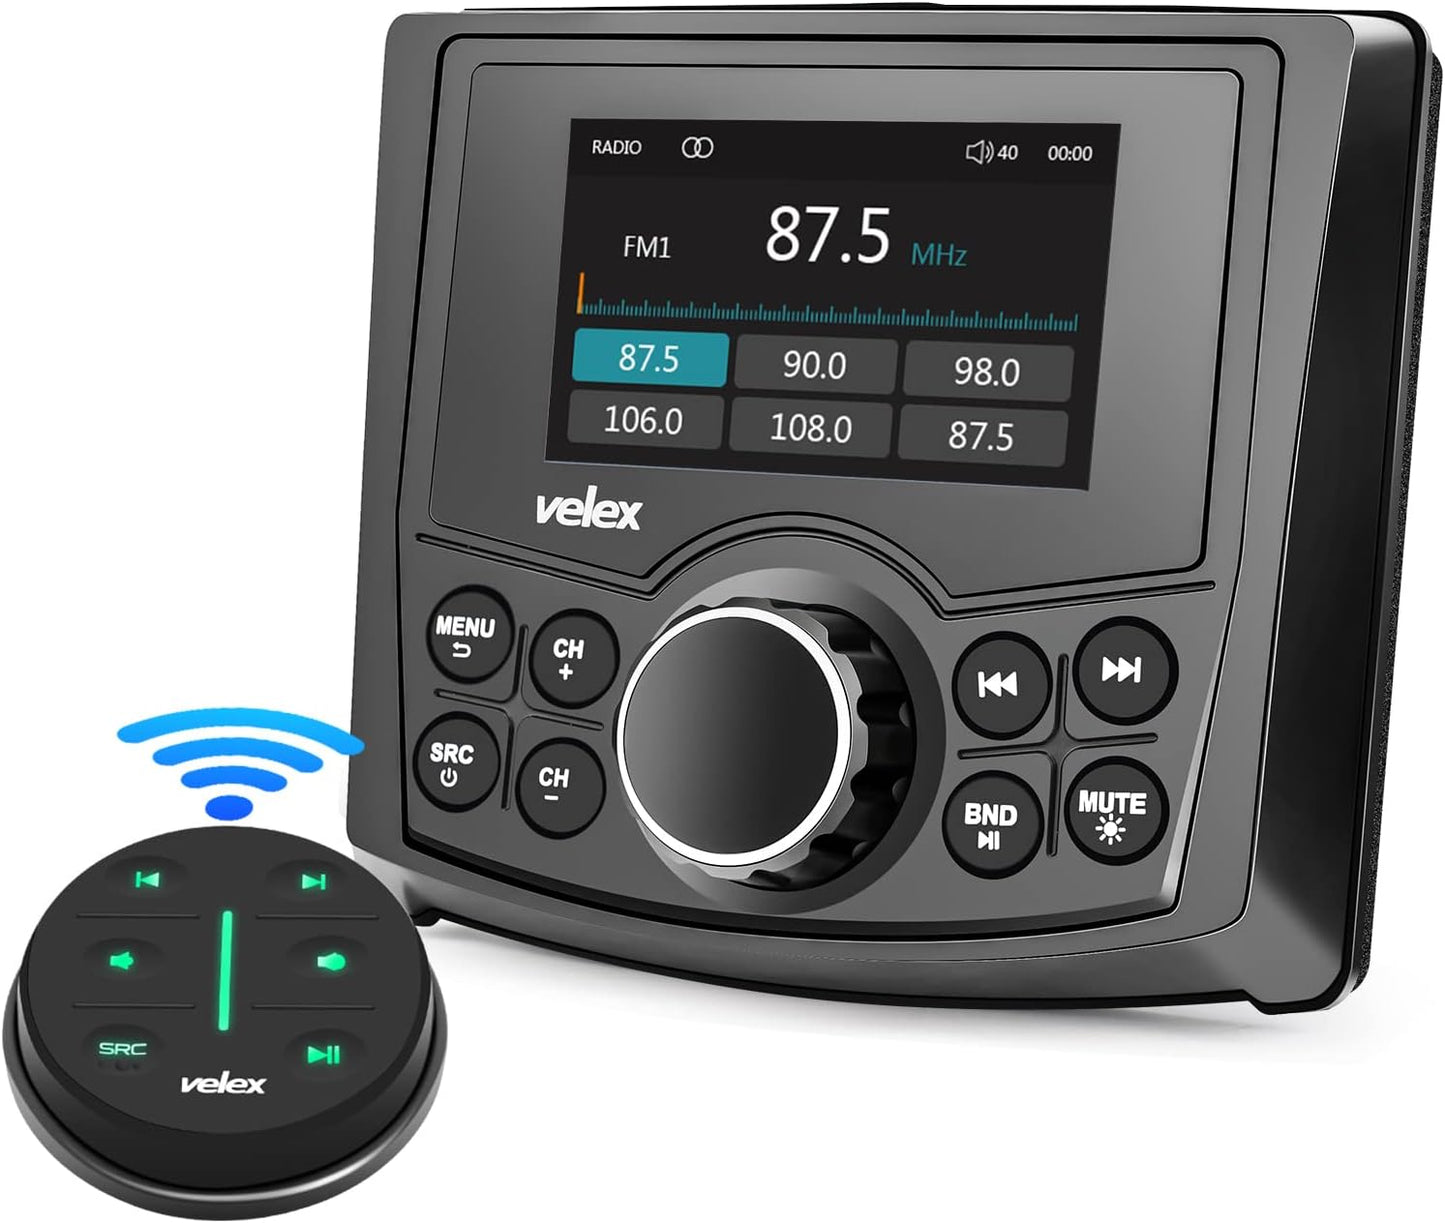 Marine Bluetooth Radio  Waterproof Media Player with Wireless Remote - Marine Stereo 4 x 45W for Boat, Golf Cart, UTV, Spa